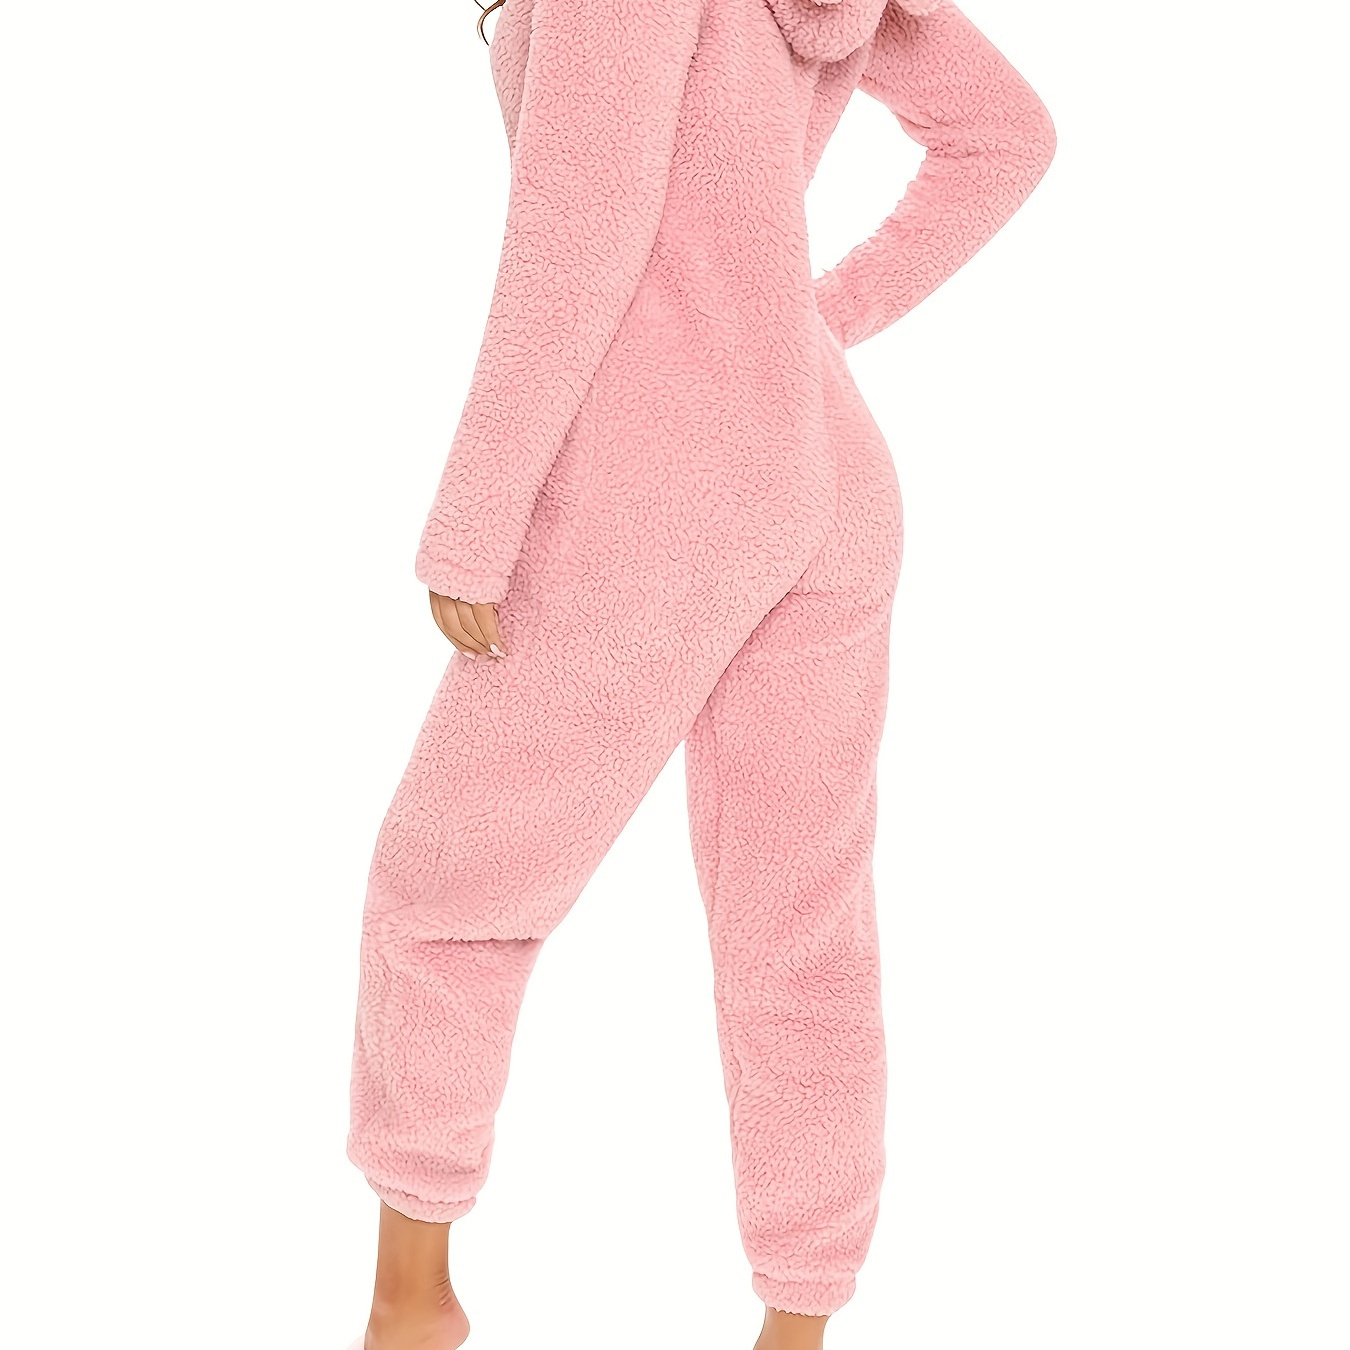 

Fuzzy Hooded Pajama Jumpsuit For Music Festival, Comfy & Cute Long Sleeve Zipper Pajamas, Women's Lingerie & Sleepwear